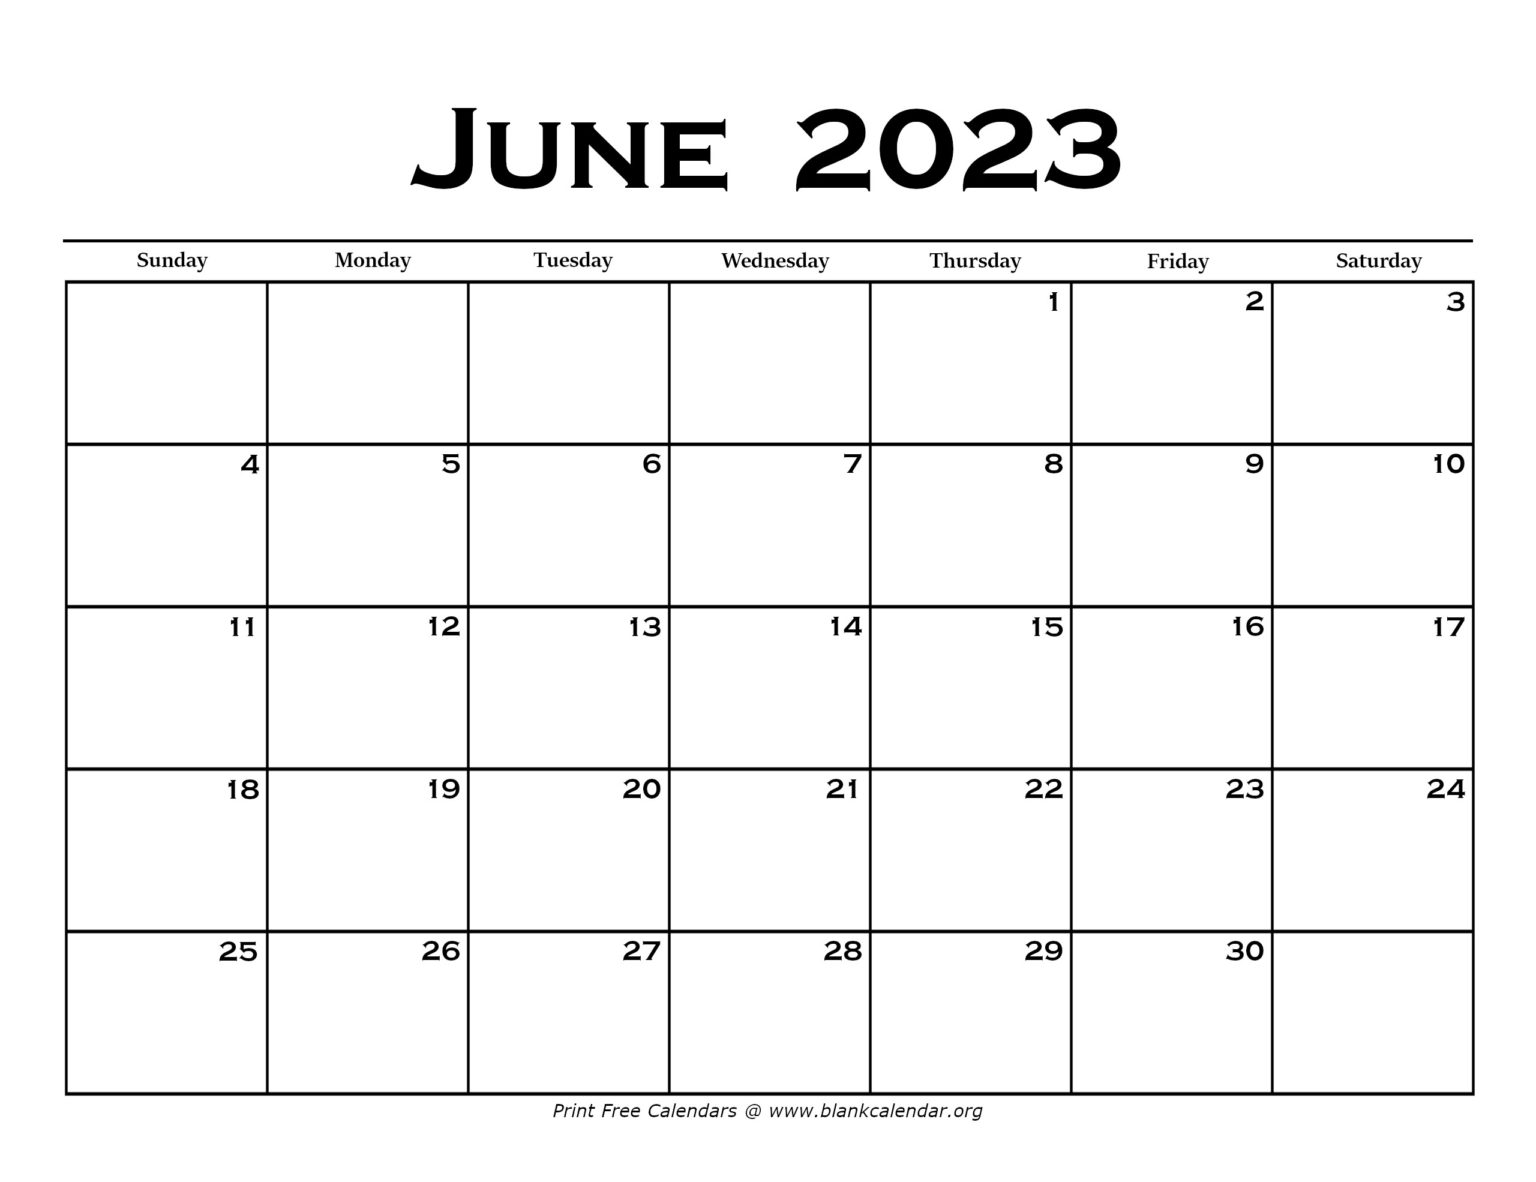 june-2023-calendar-blank-calendar